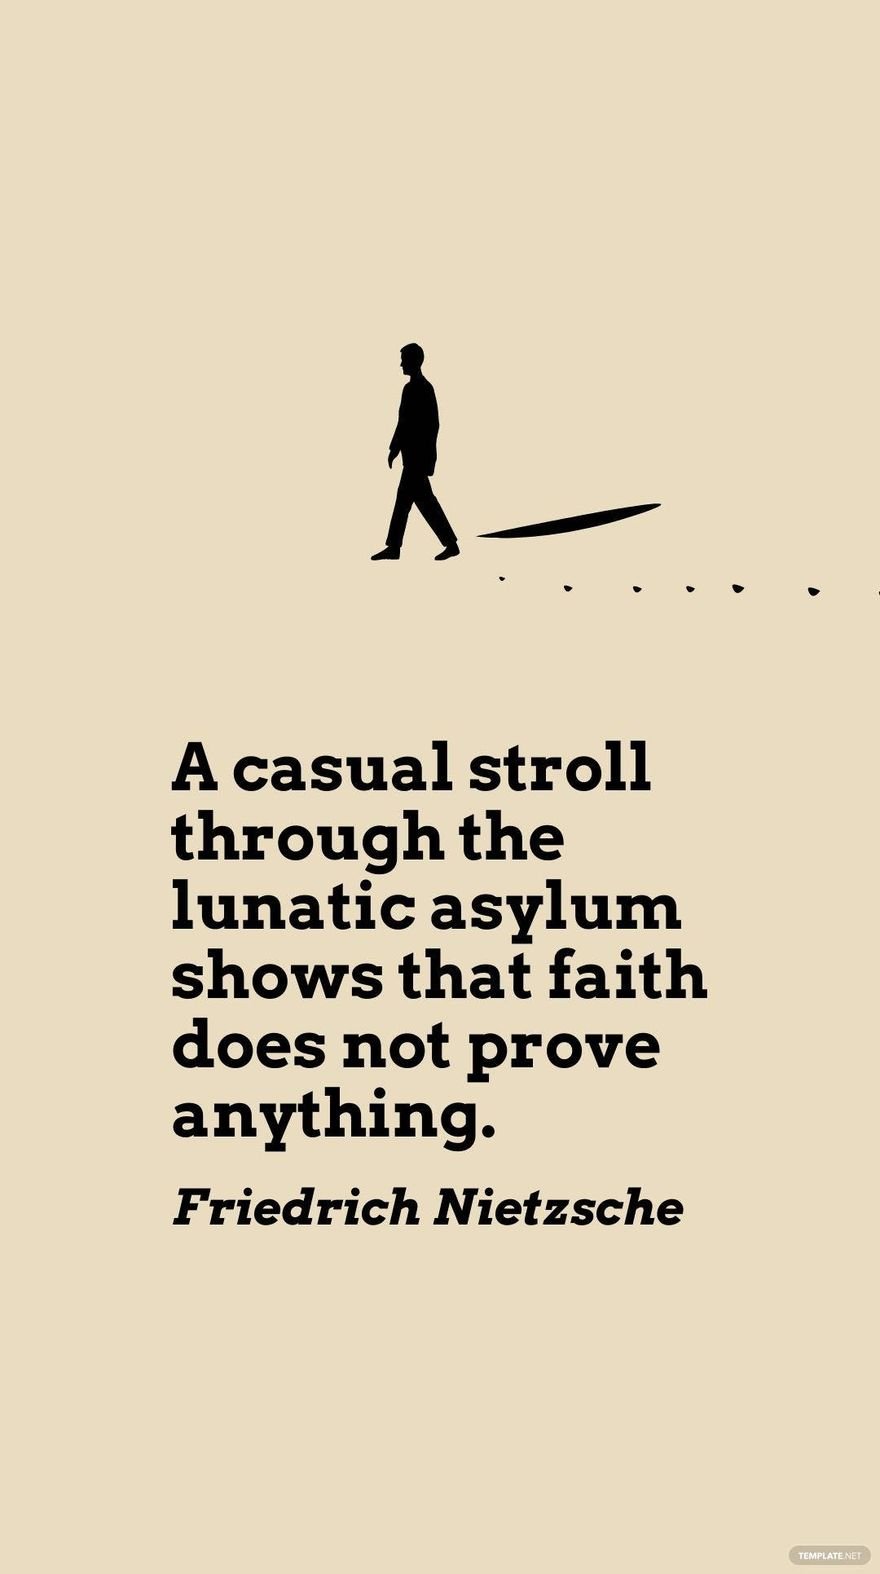 Friedrich Nietzsche - A casual stroll through the lunatic asylum shows that faith does not prove anything.